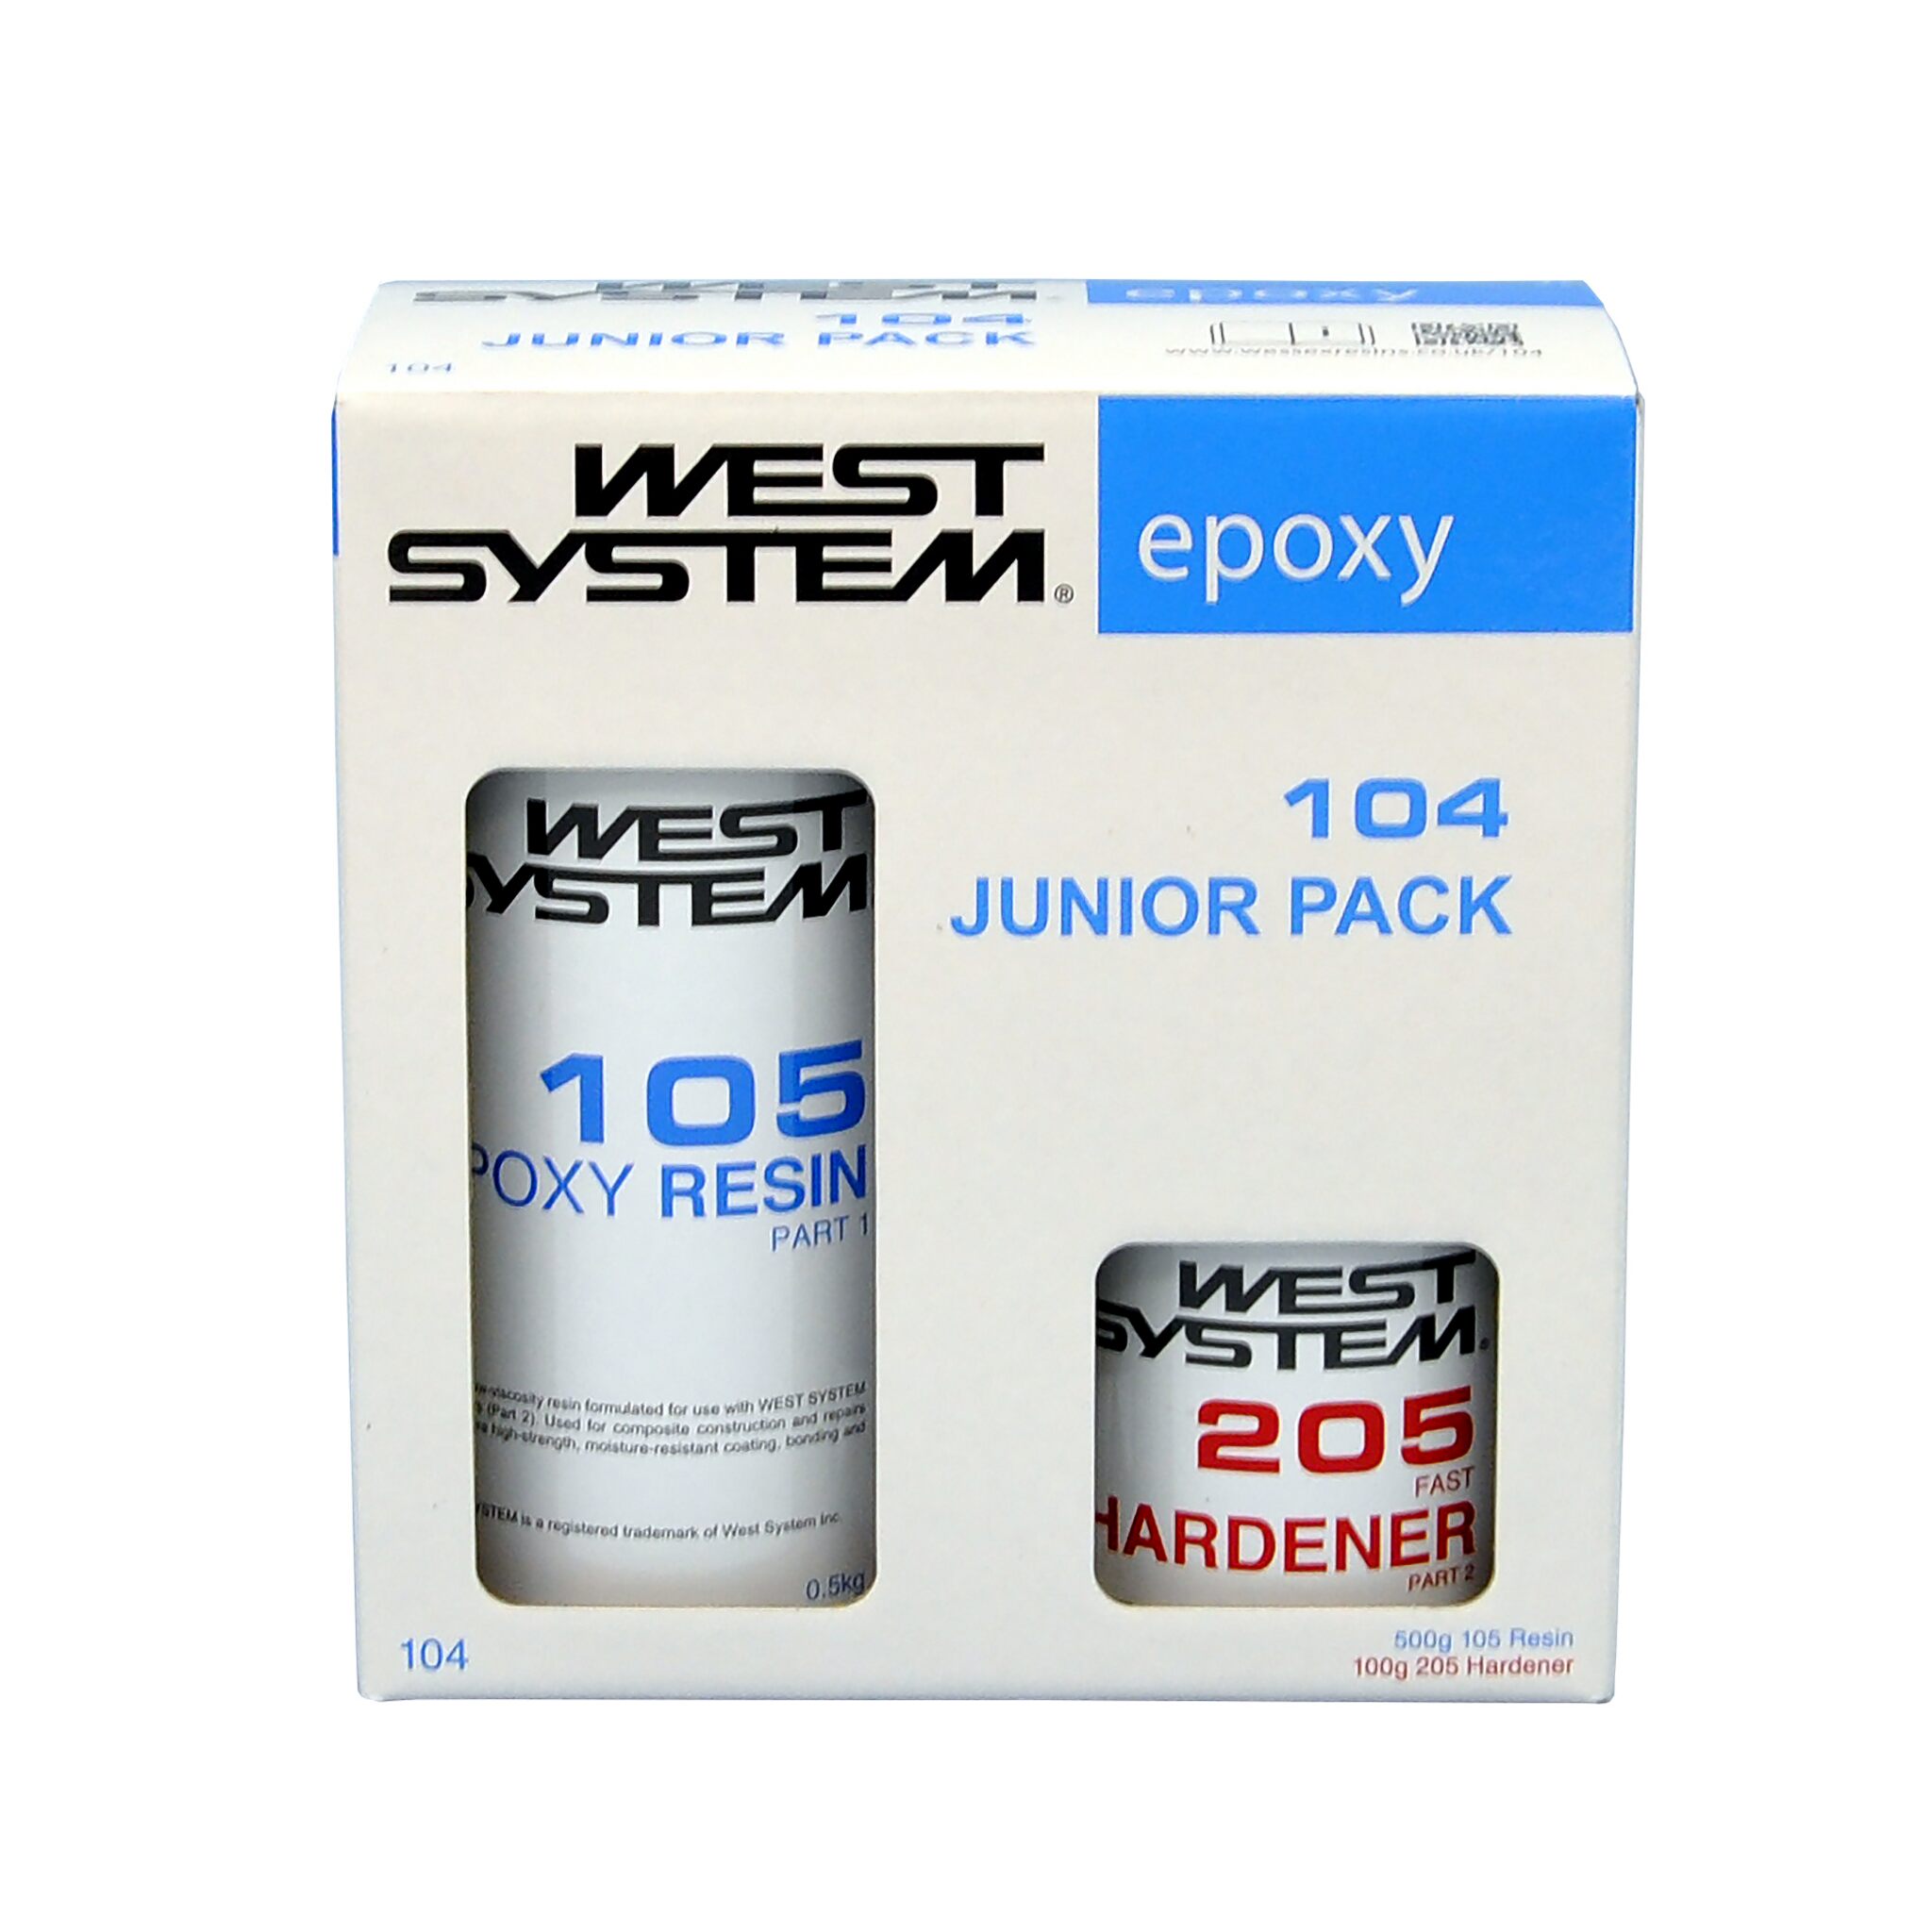 West System Junior Pack Epoxy Resin 105/Hardener 205